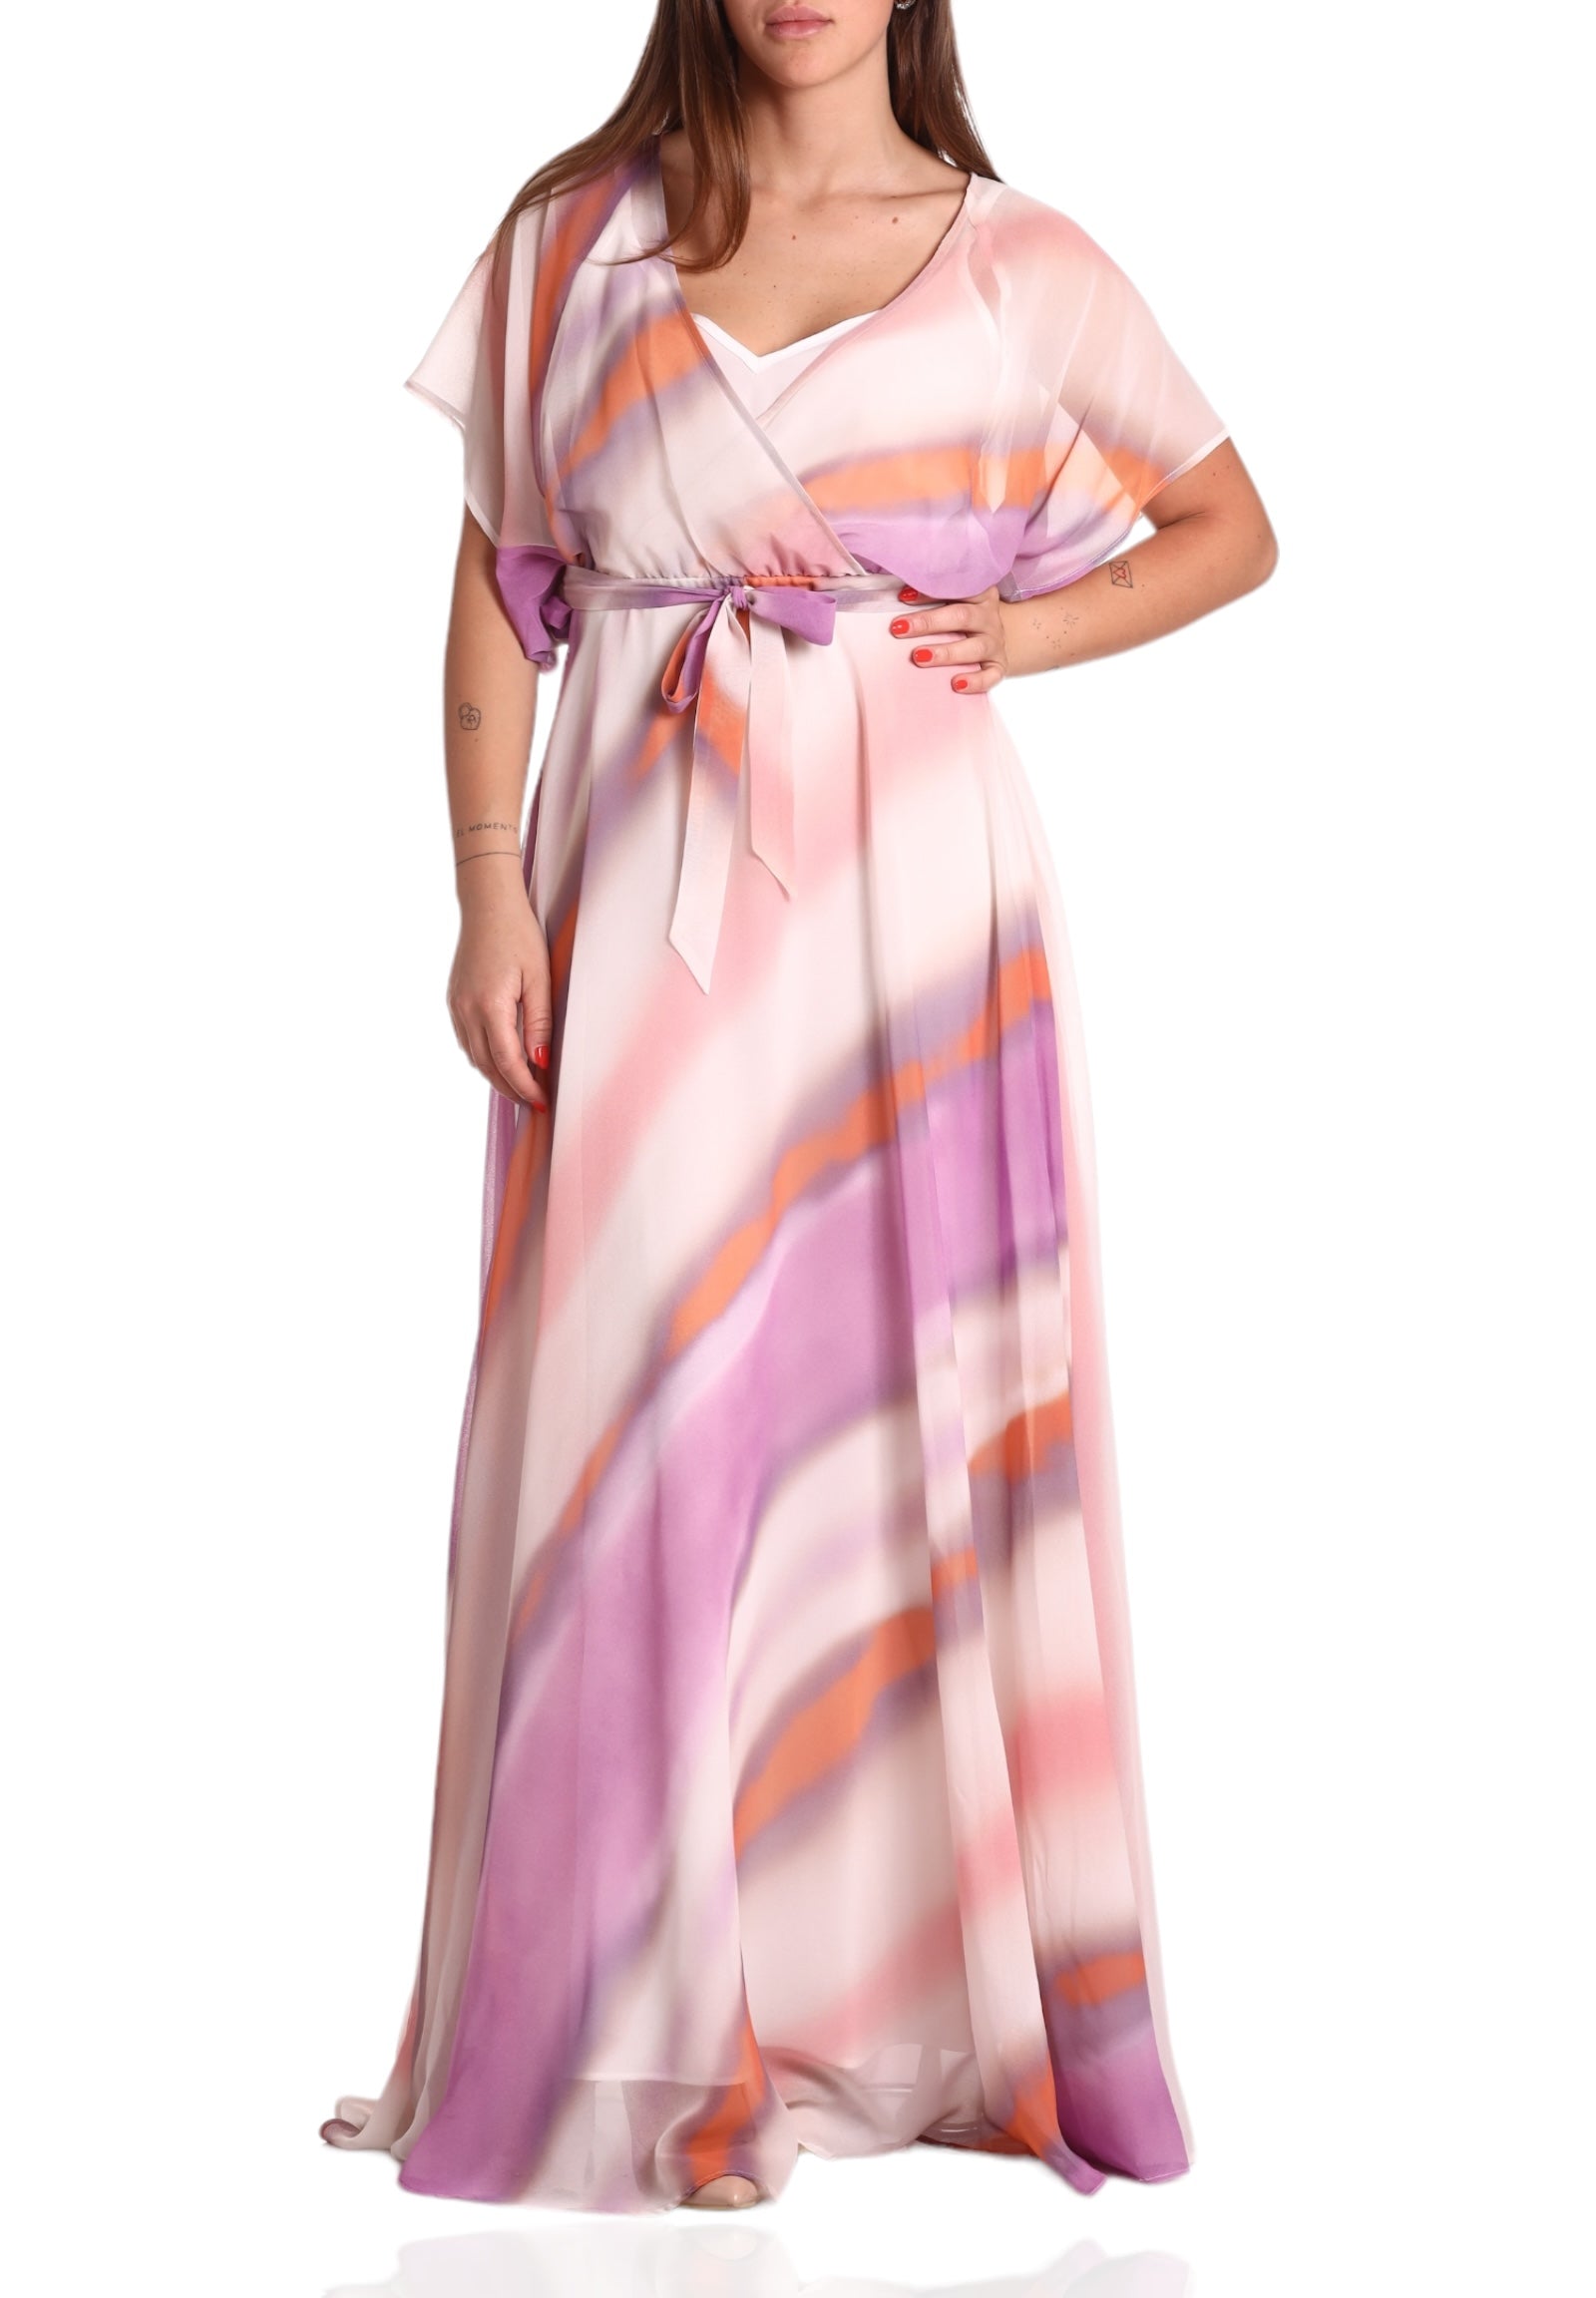 Venice lilac dress